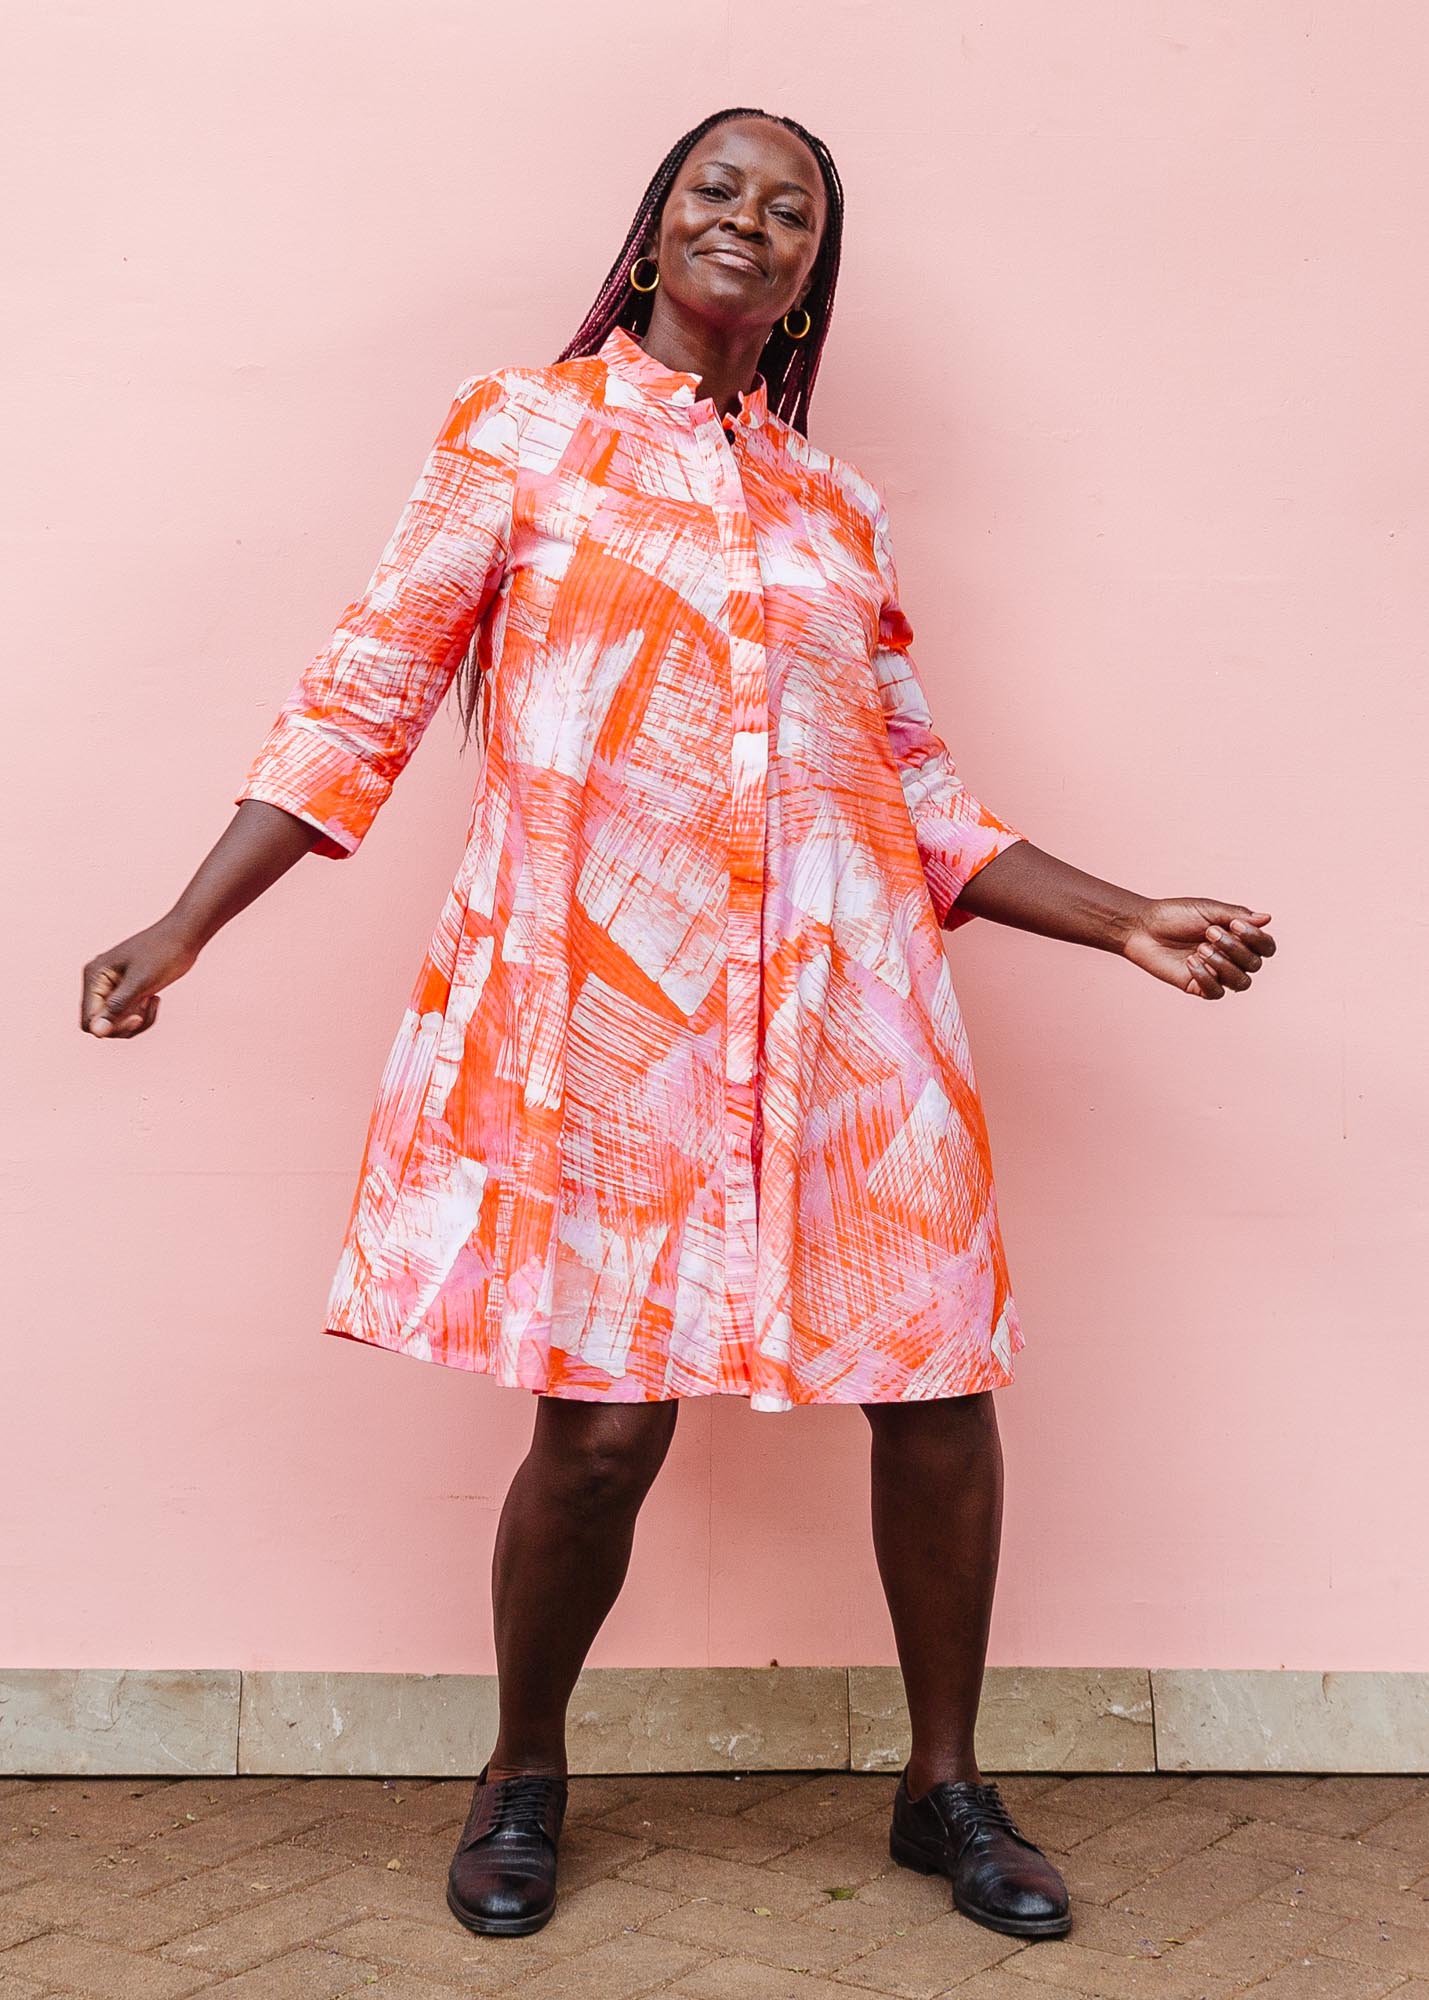 The model is wearing orange, pink and white brushstrokes batik dress 